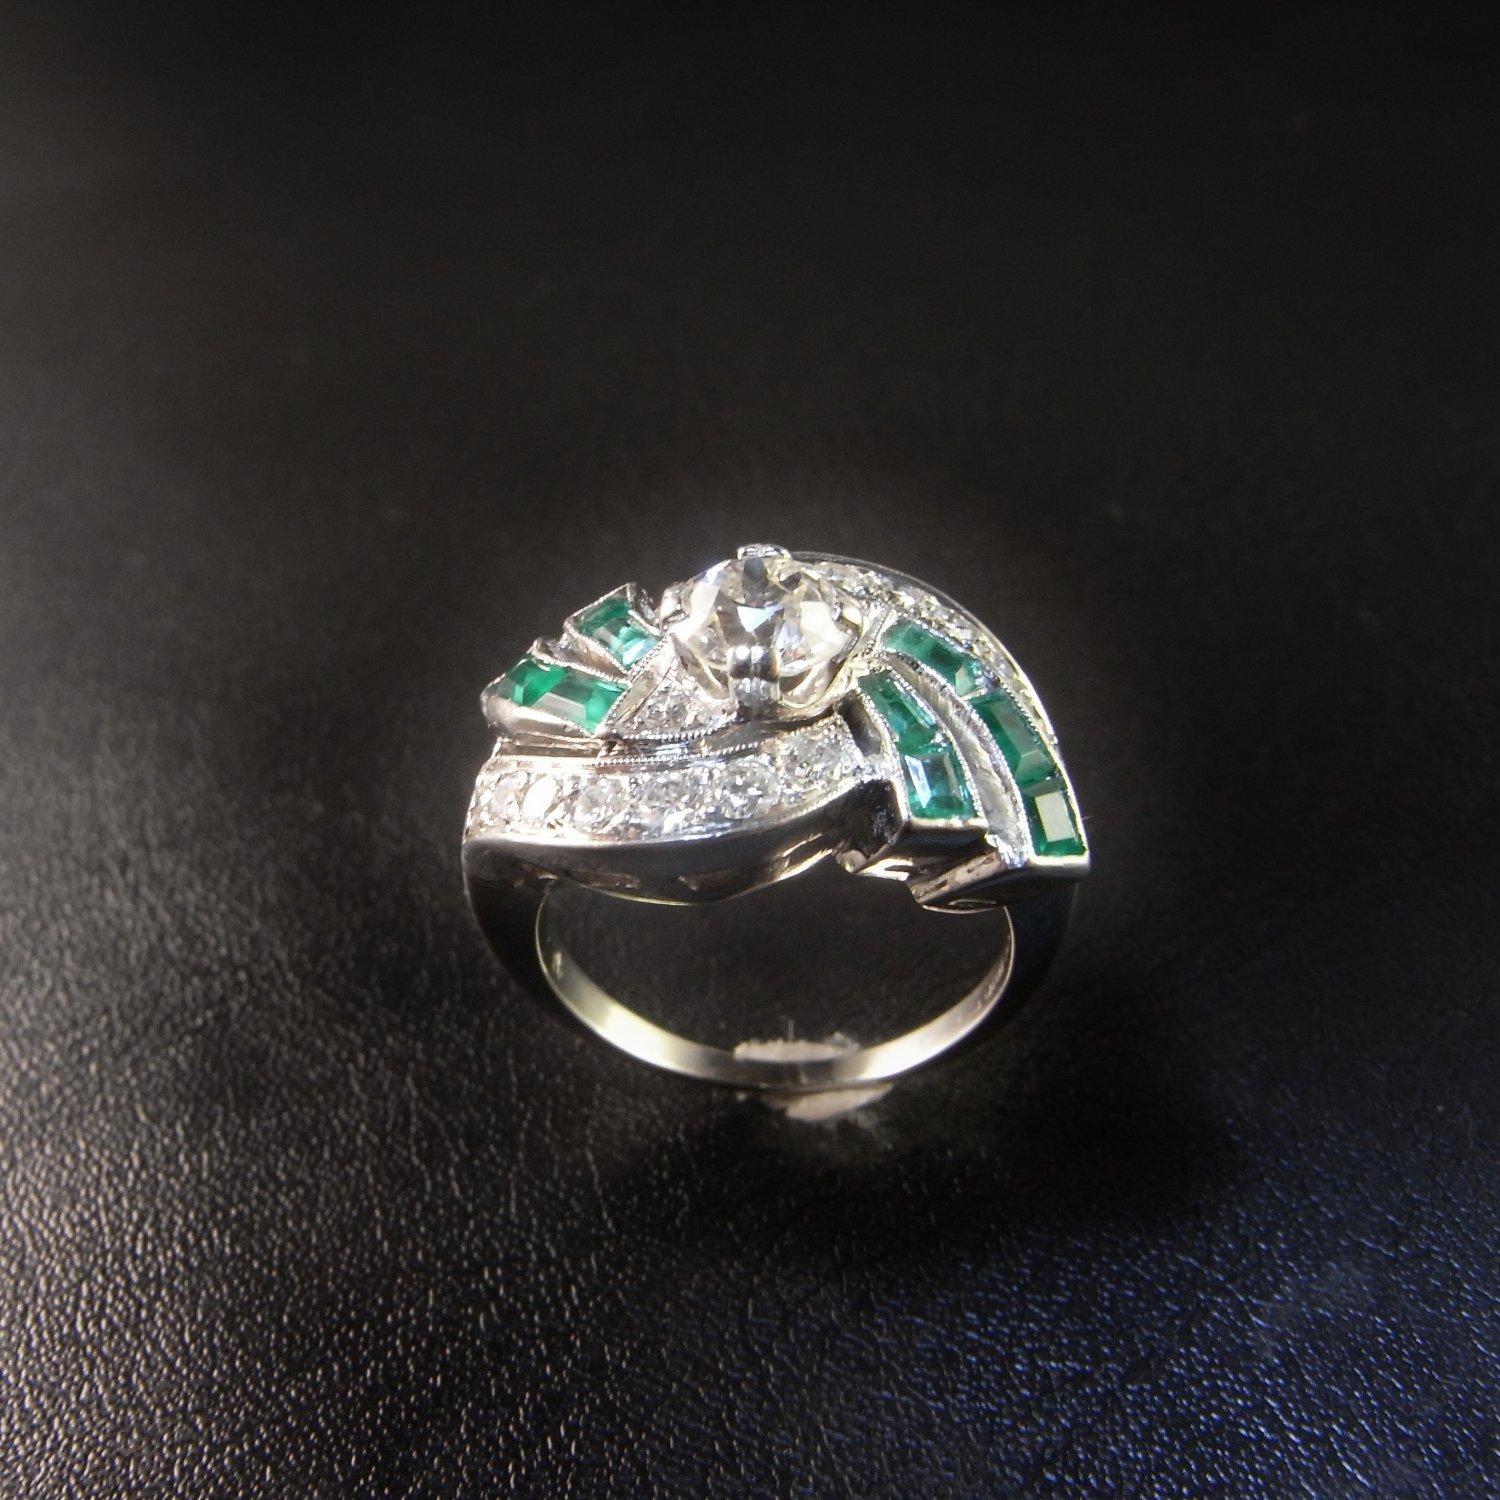 Emerald Art Deco Engagement Ring Diamond Emerald Engagement Ring Wedding Ring 1920s Engagement Ring 1930s 1940s Gatsby Downton Abbey Luxury High End OMC OEC European Cut Old Cut Rare